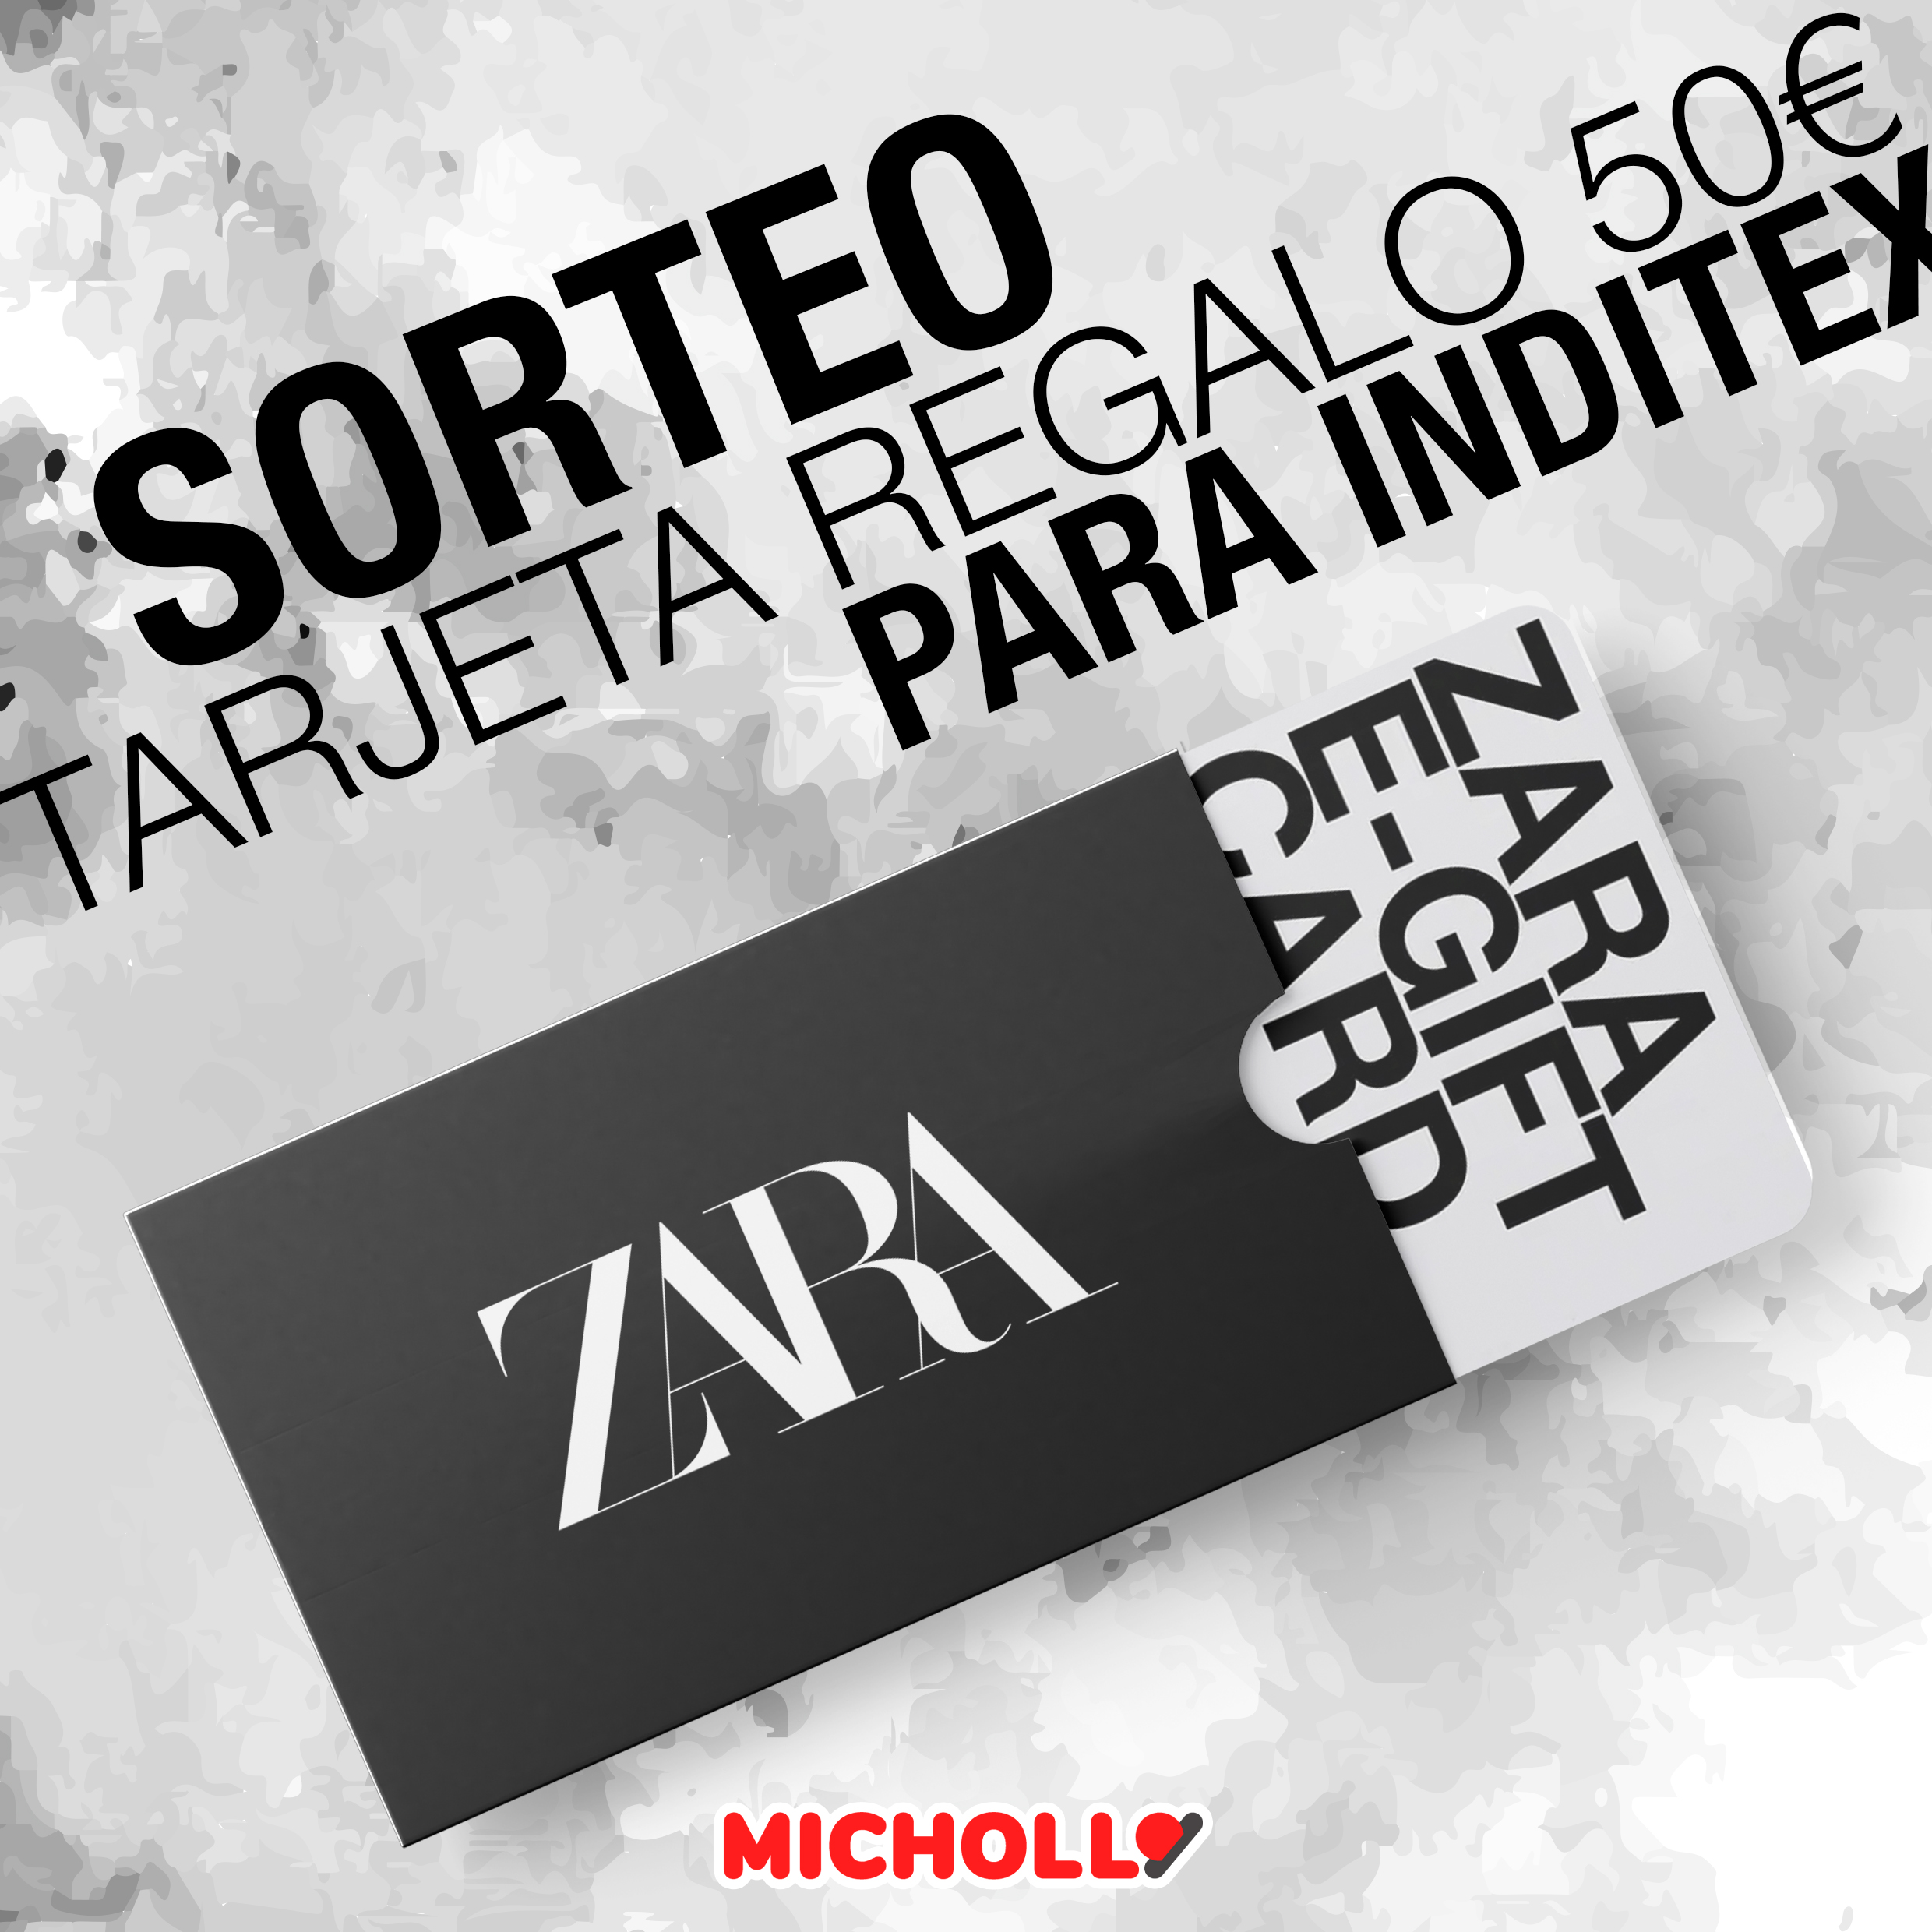 Guia Parte Actual Sorteo tarjeta regalo Inditex 50€! » Michollo.com